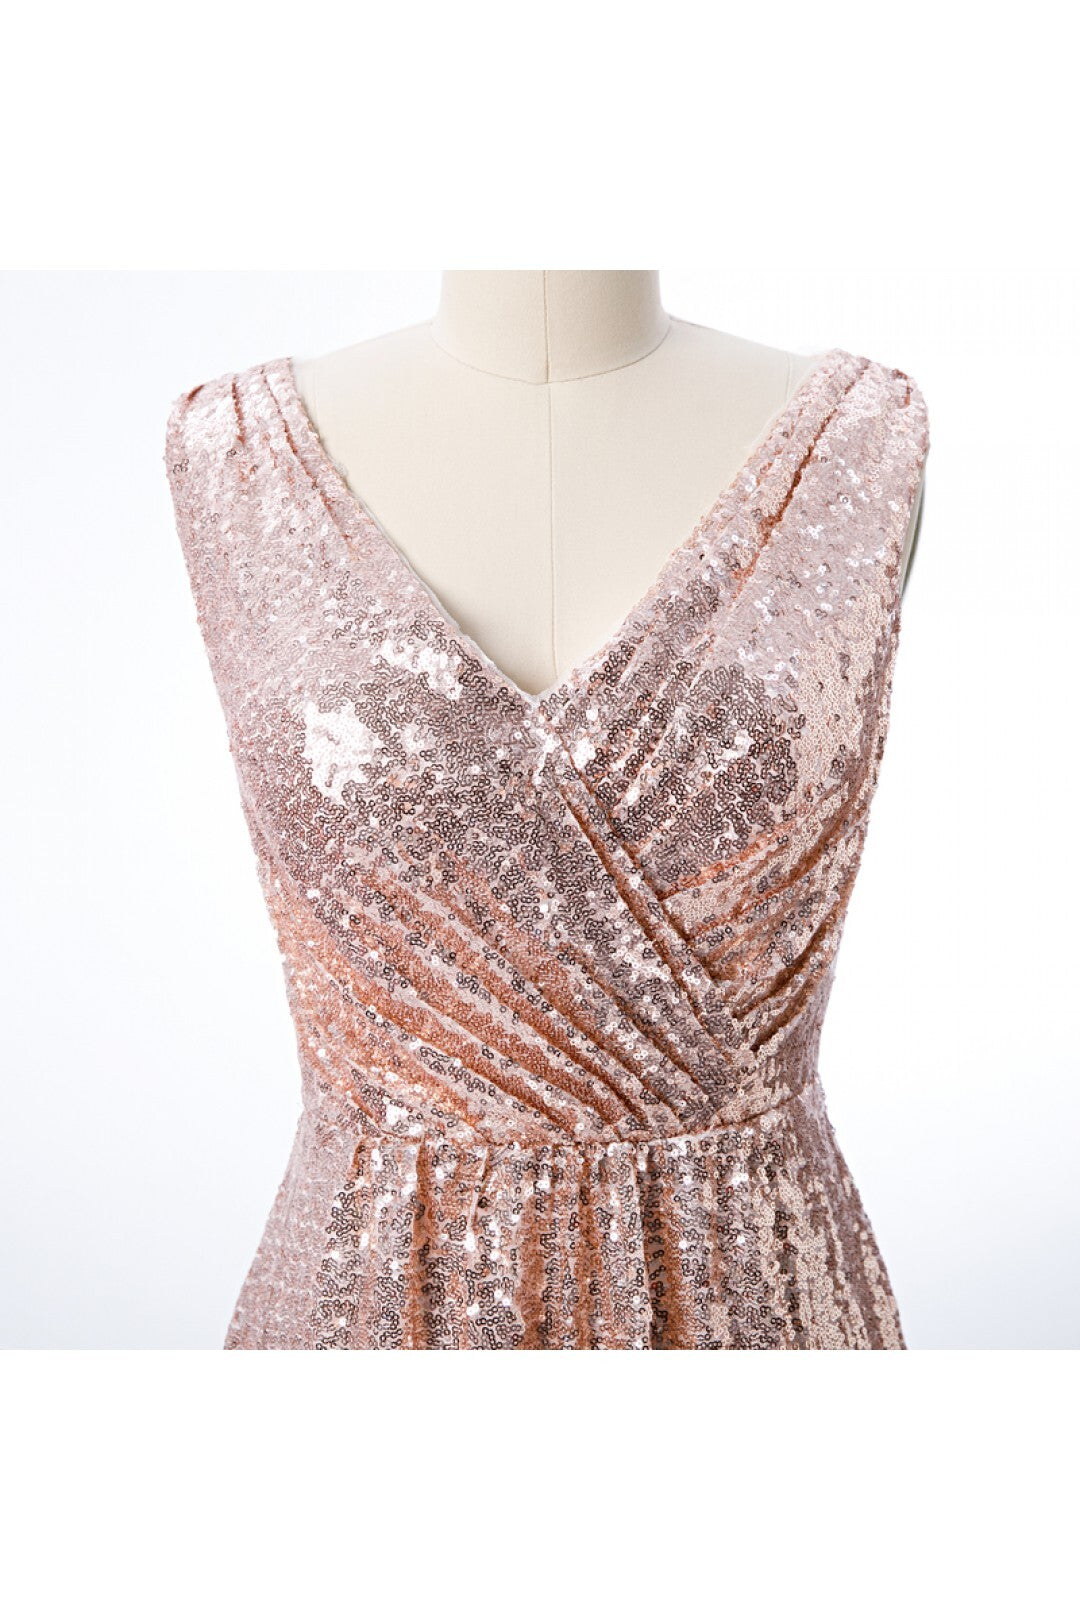 A-line Rose Gold Sequins Long Bridesmaid Dress